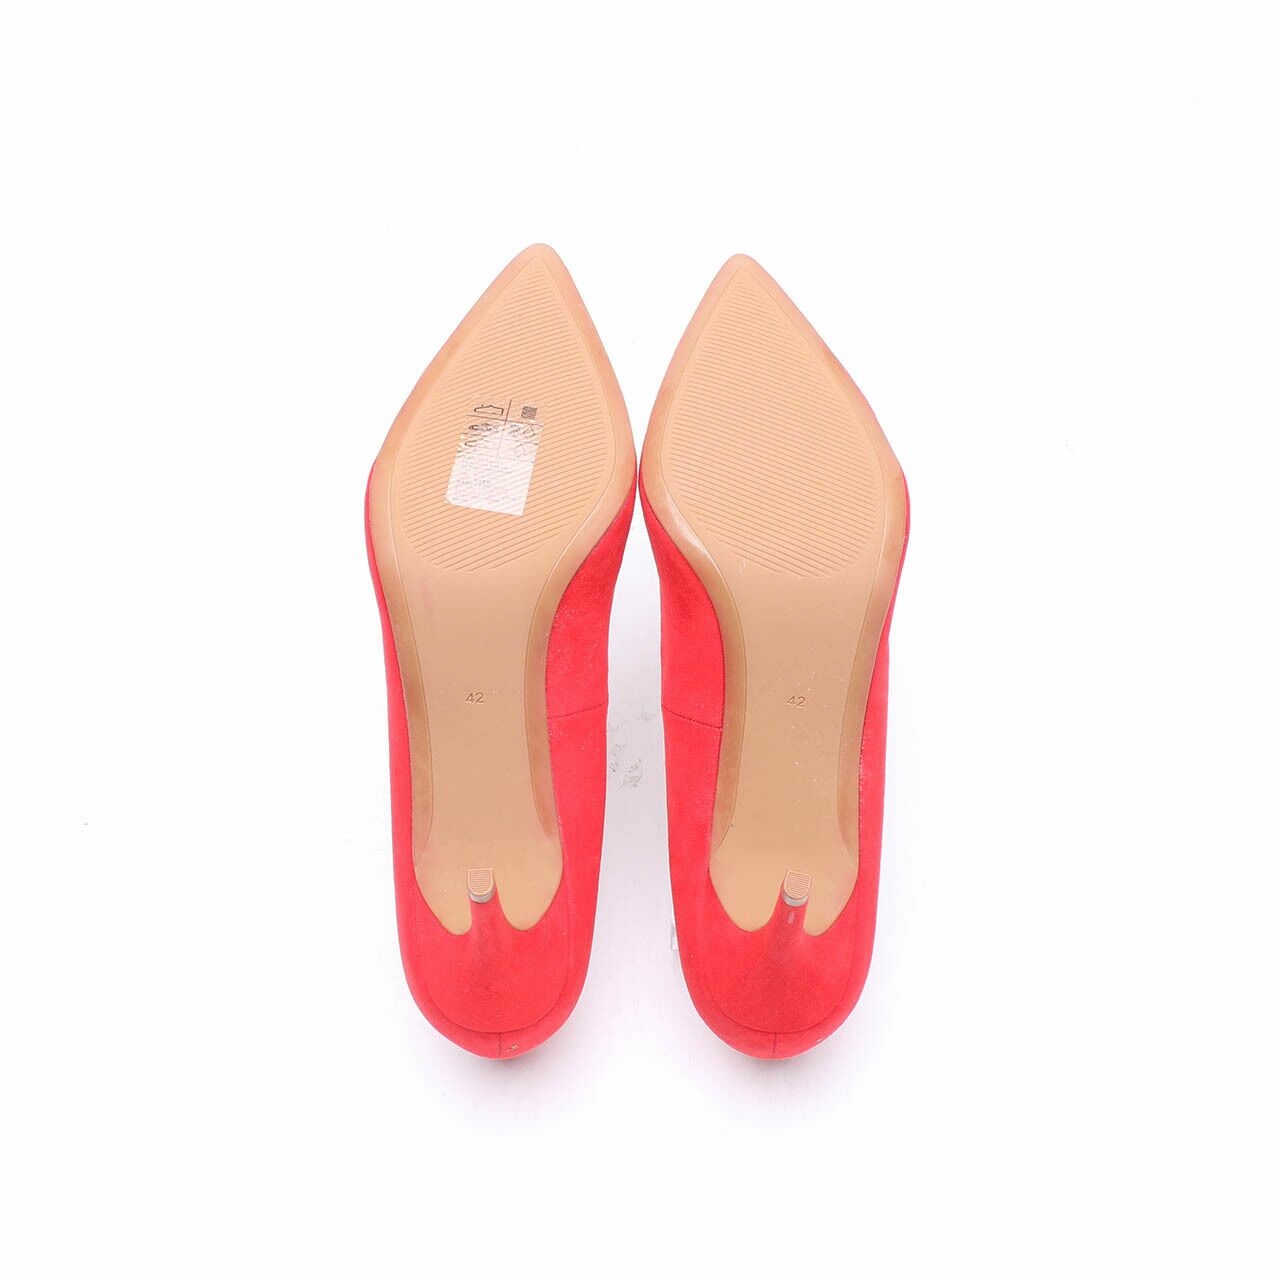 H&M Red Heels